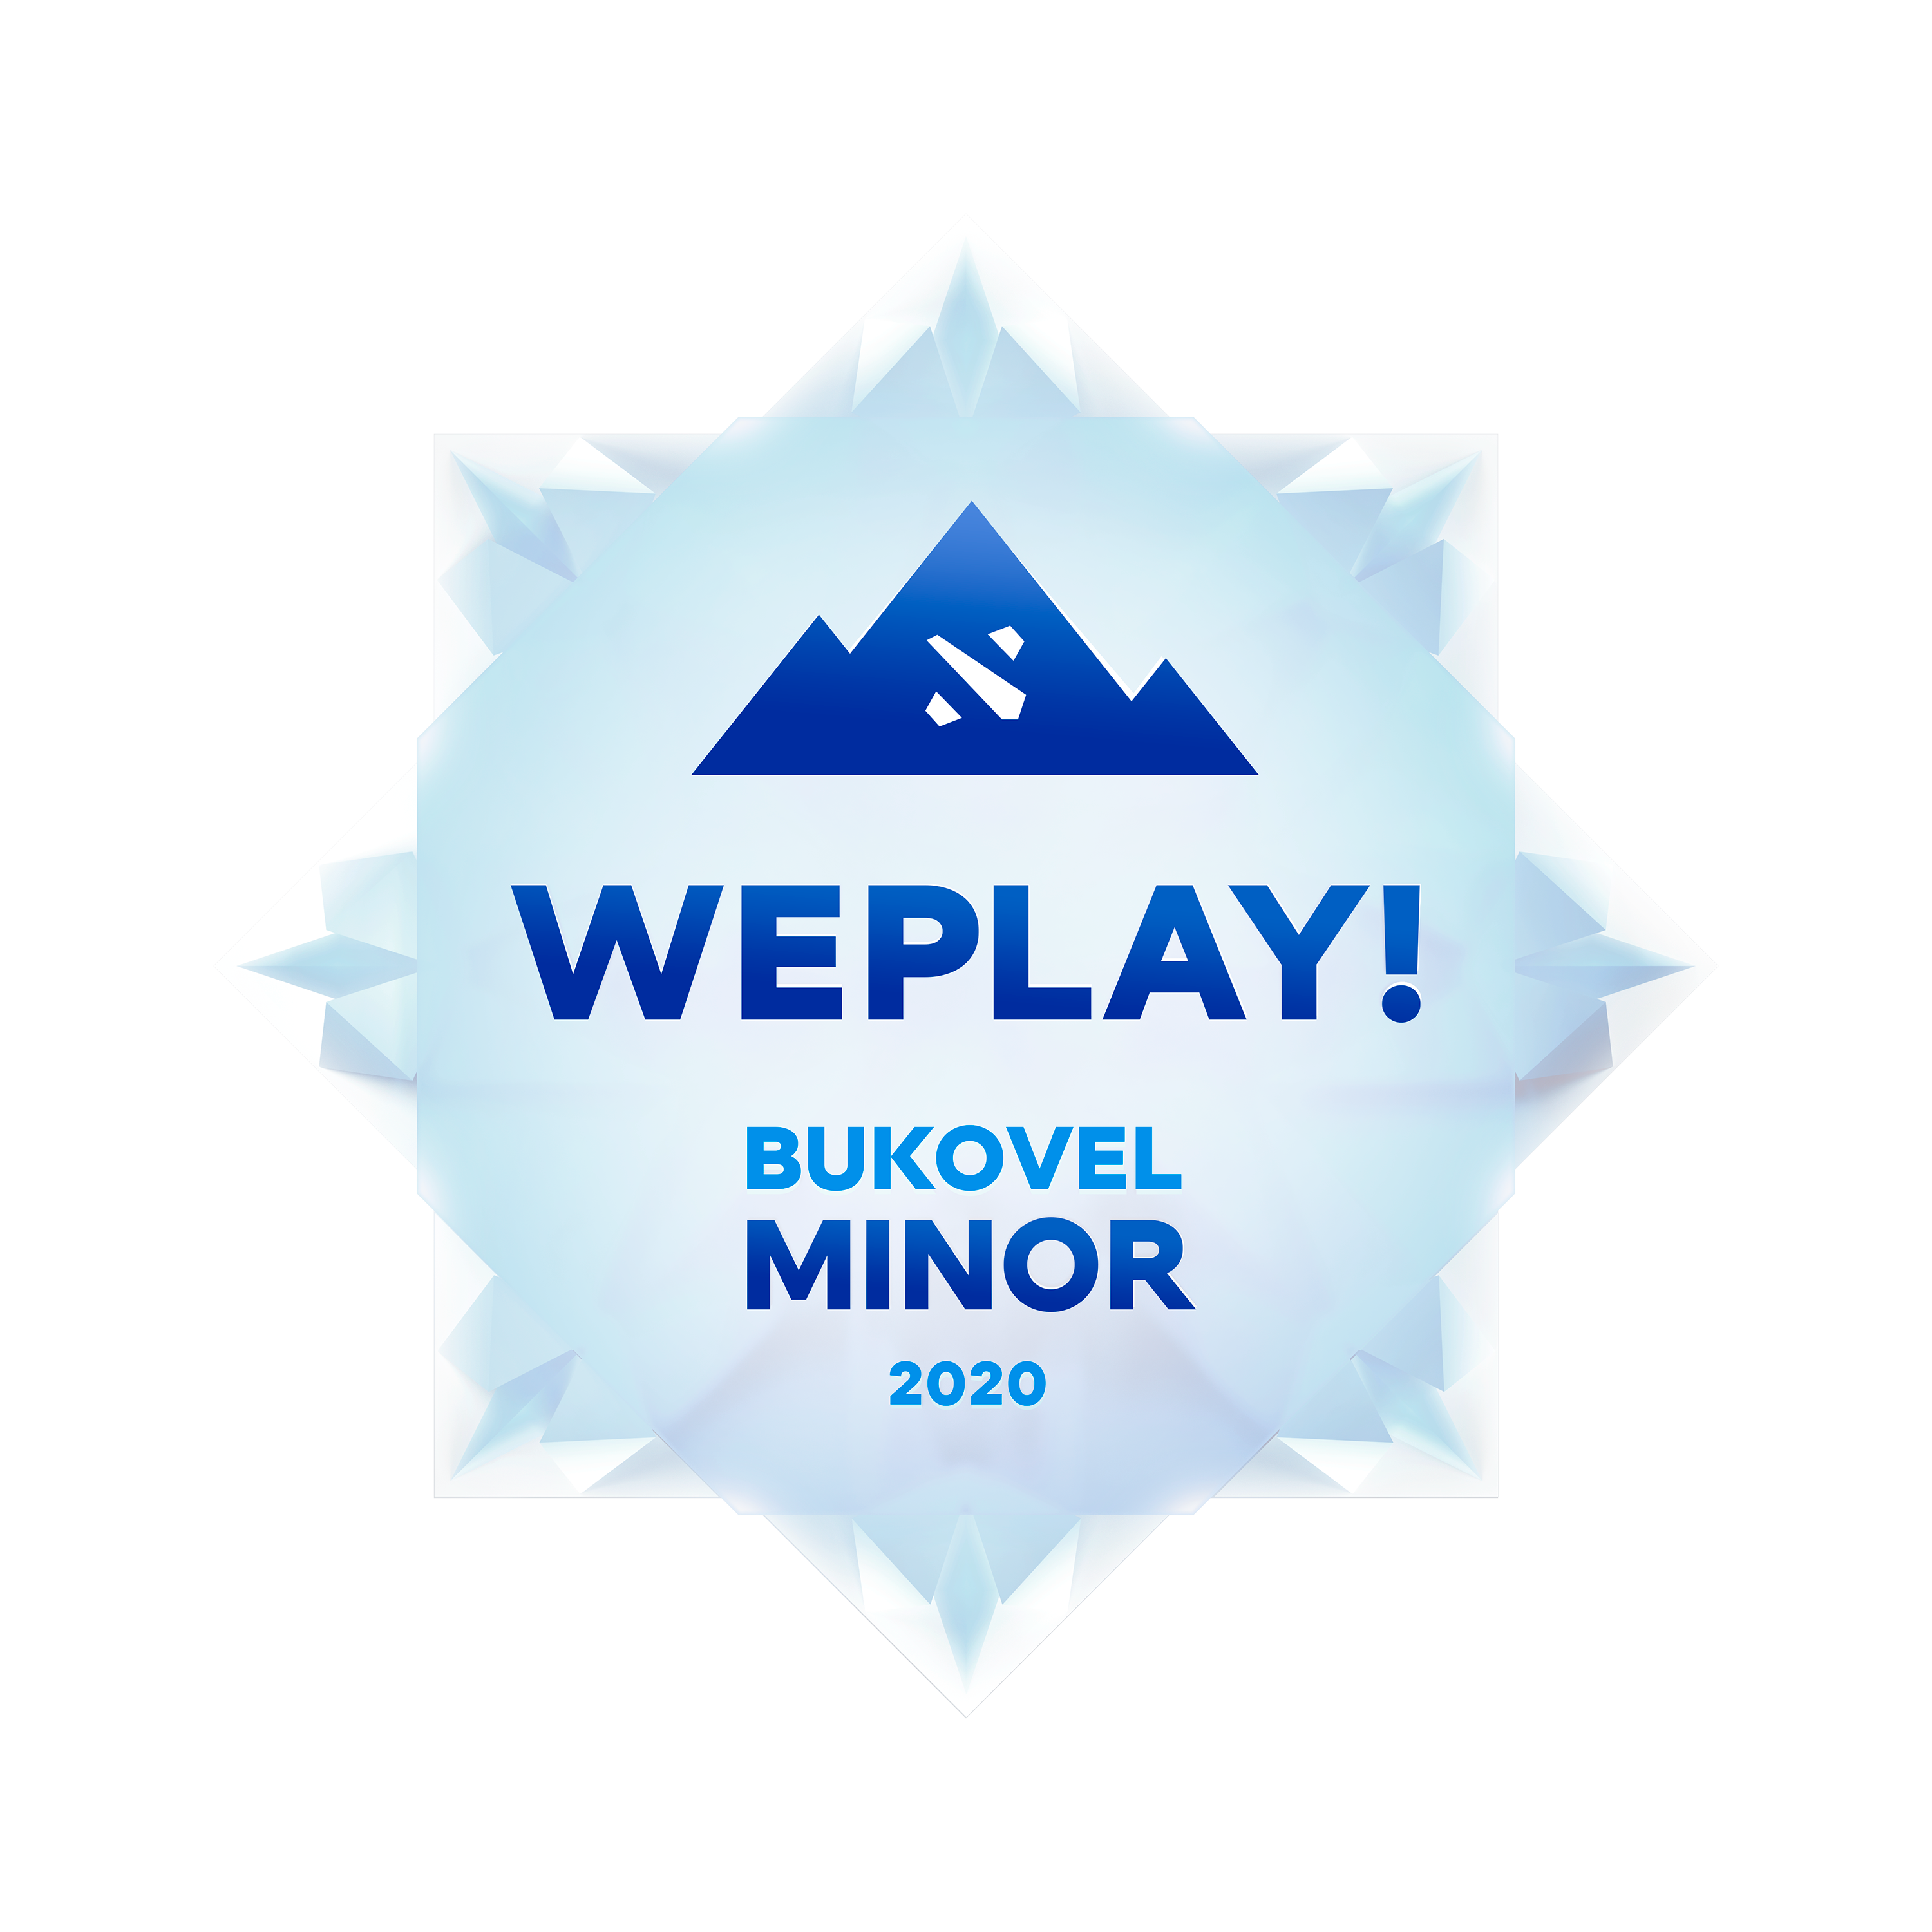 The emblem of WePlay! Bukovel Minor 2020